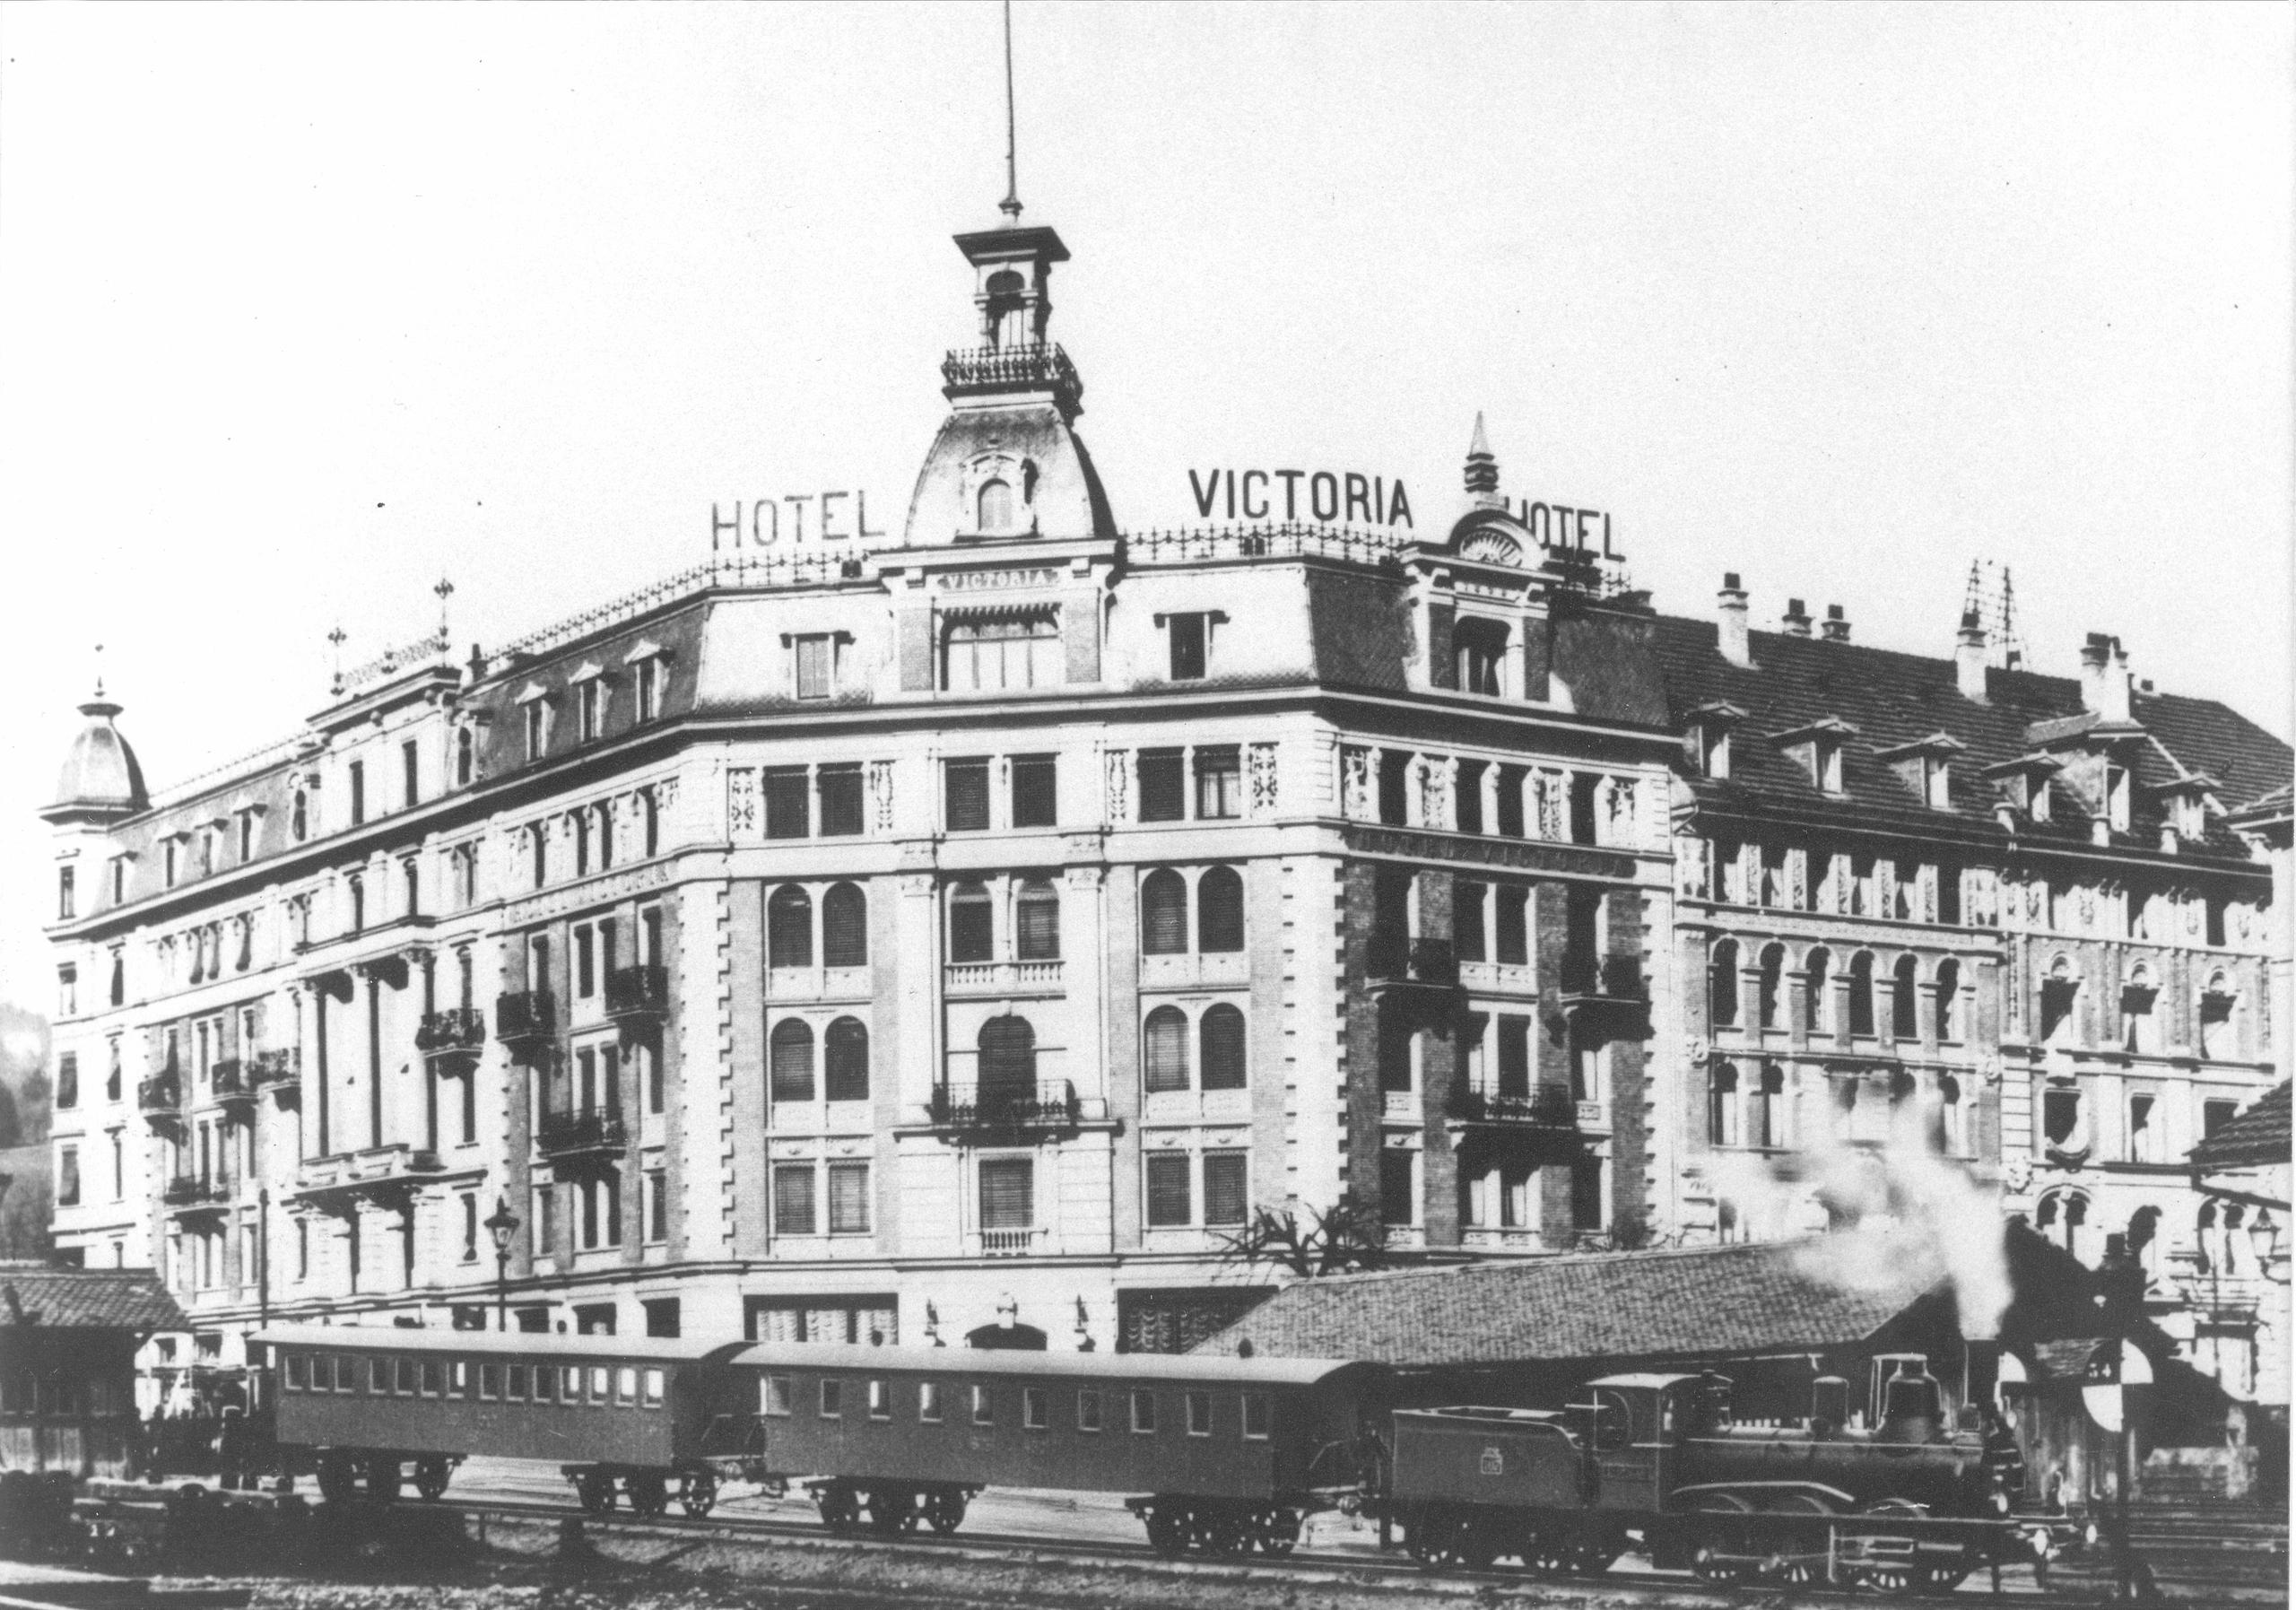 Hotel Victoria in Lucerne